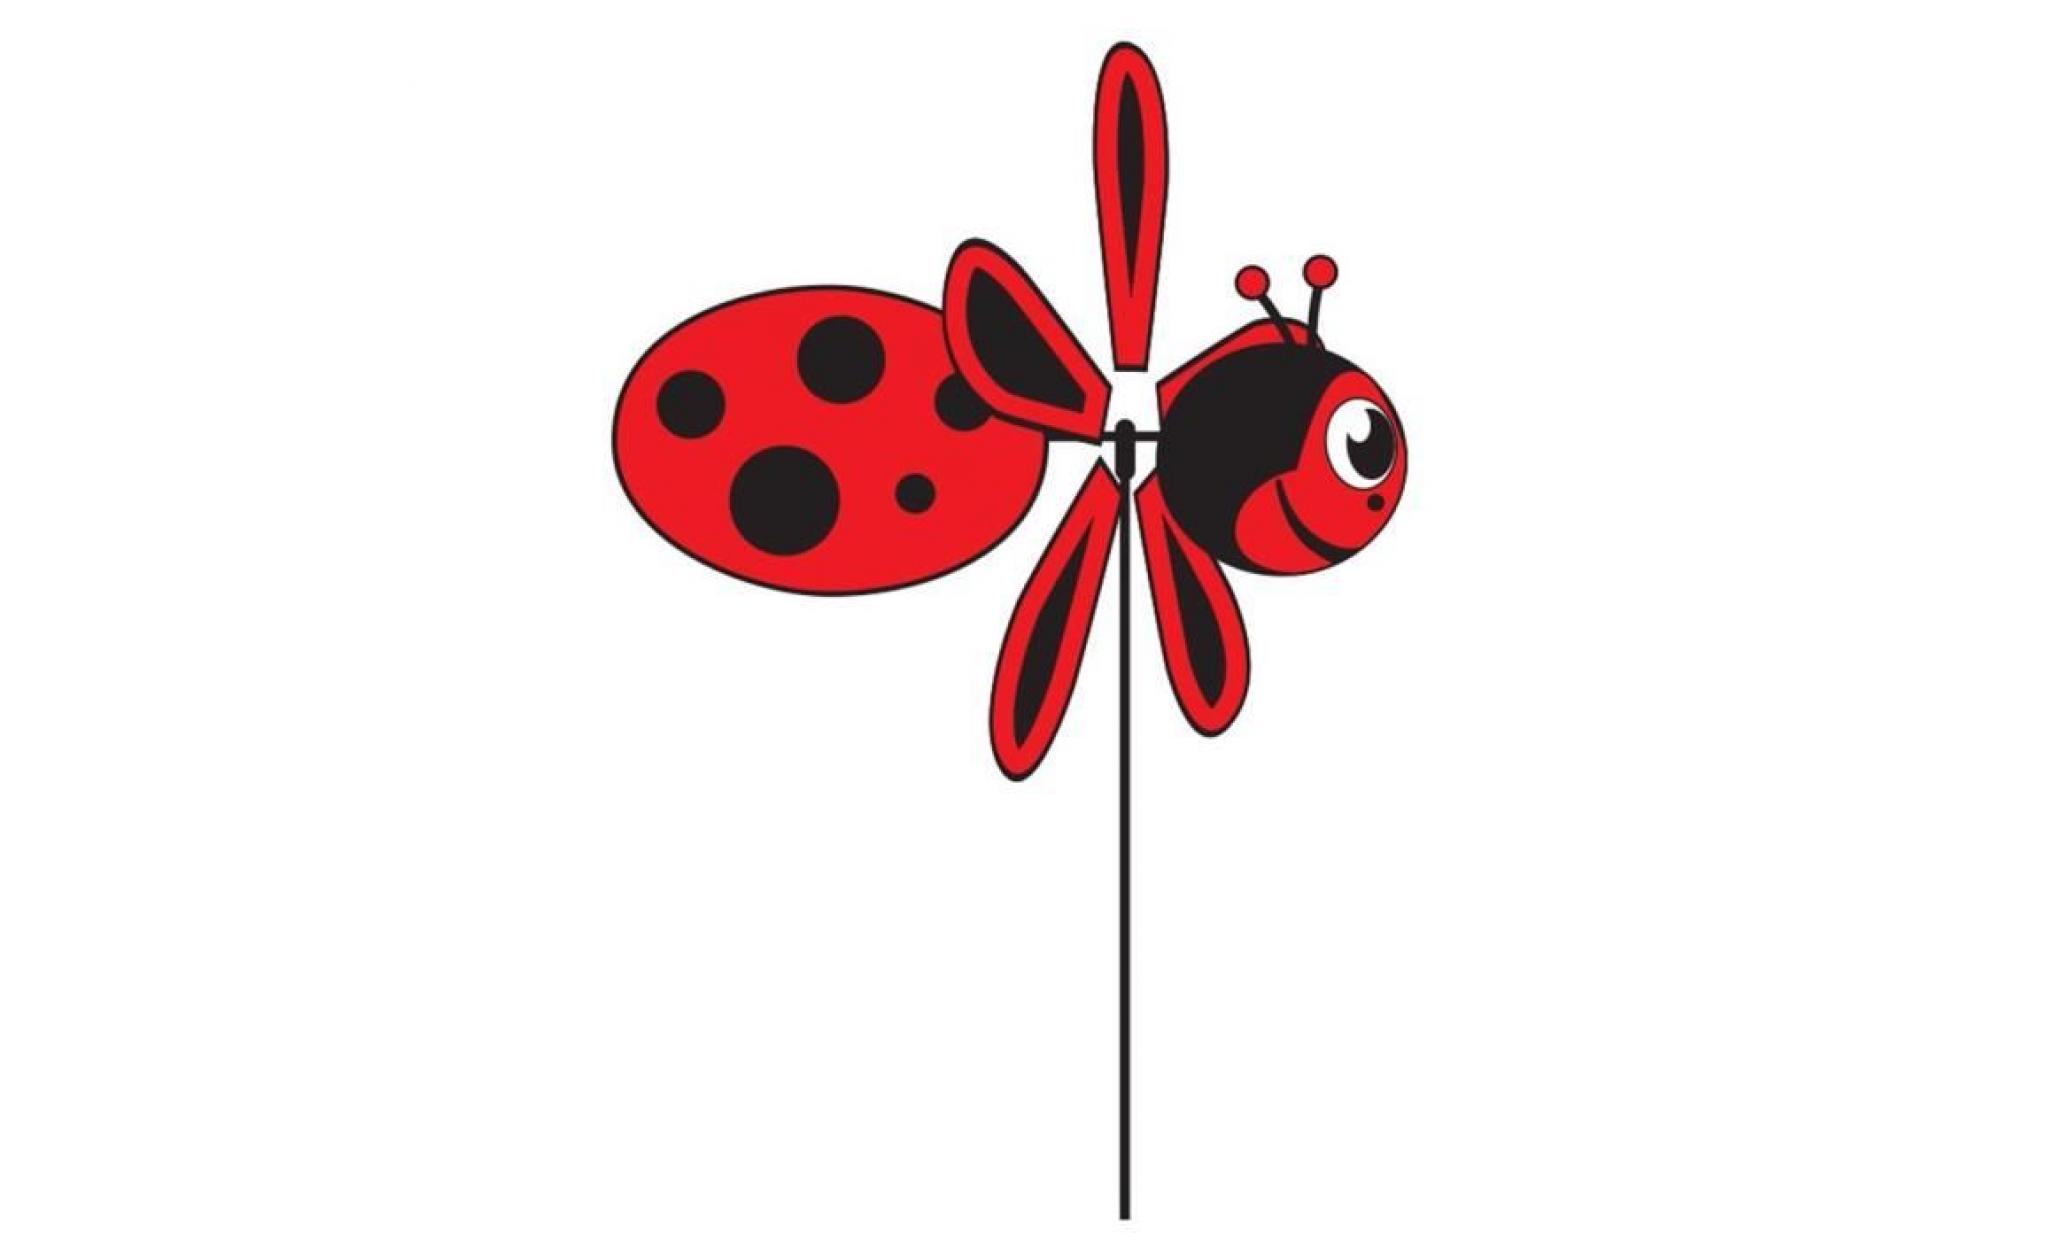 elliot moulin à vent coccinelle   rotor ladybug